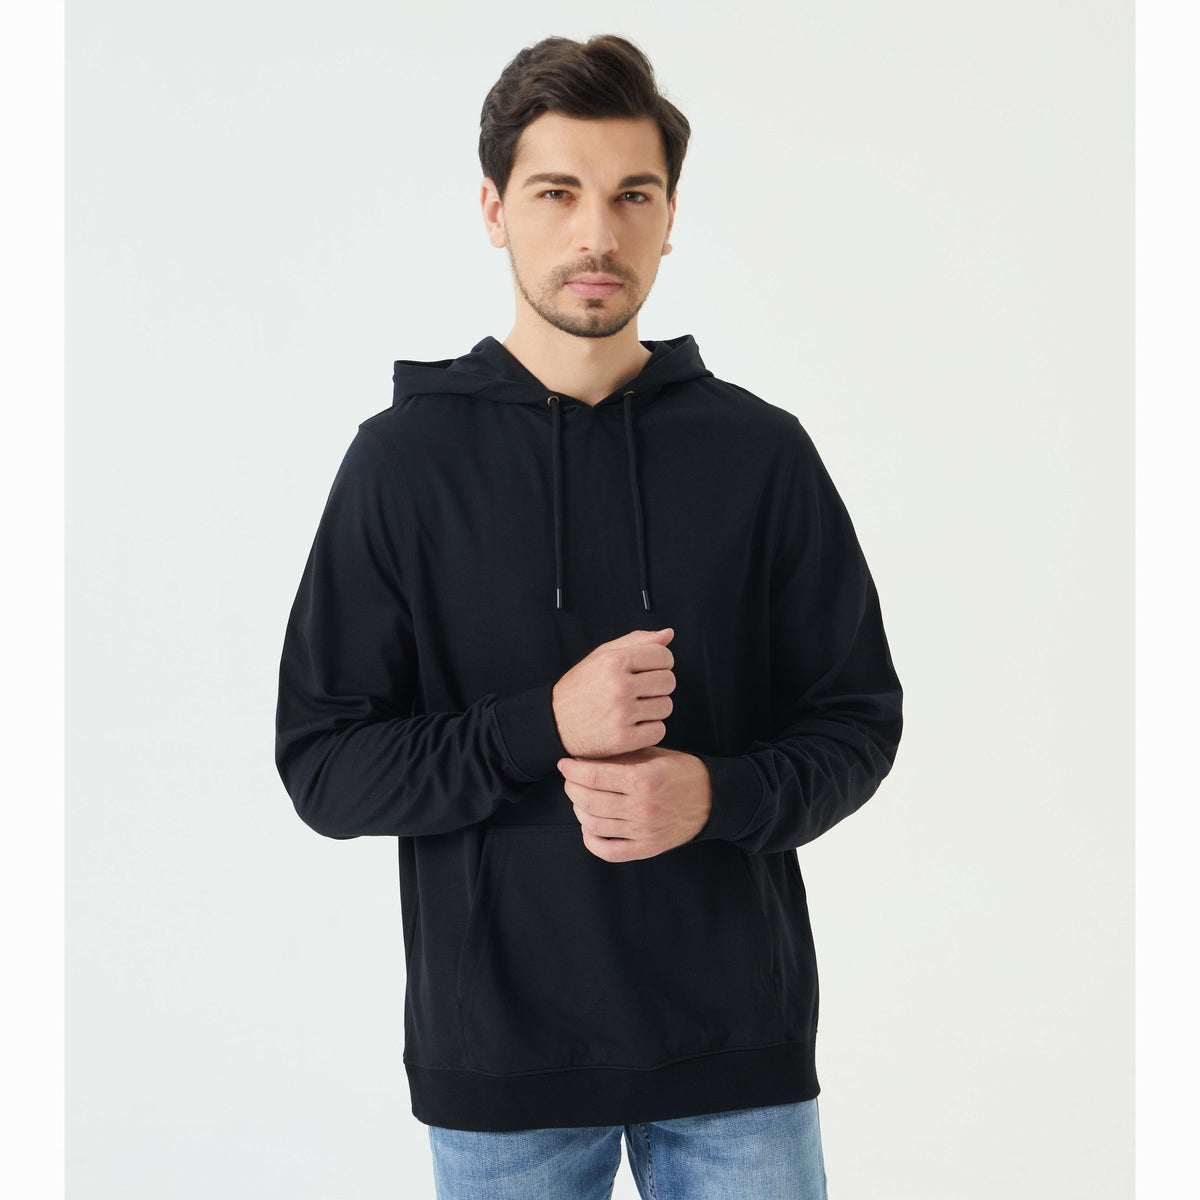 EMF Shielding Pullover Sweatshirt in Black